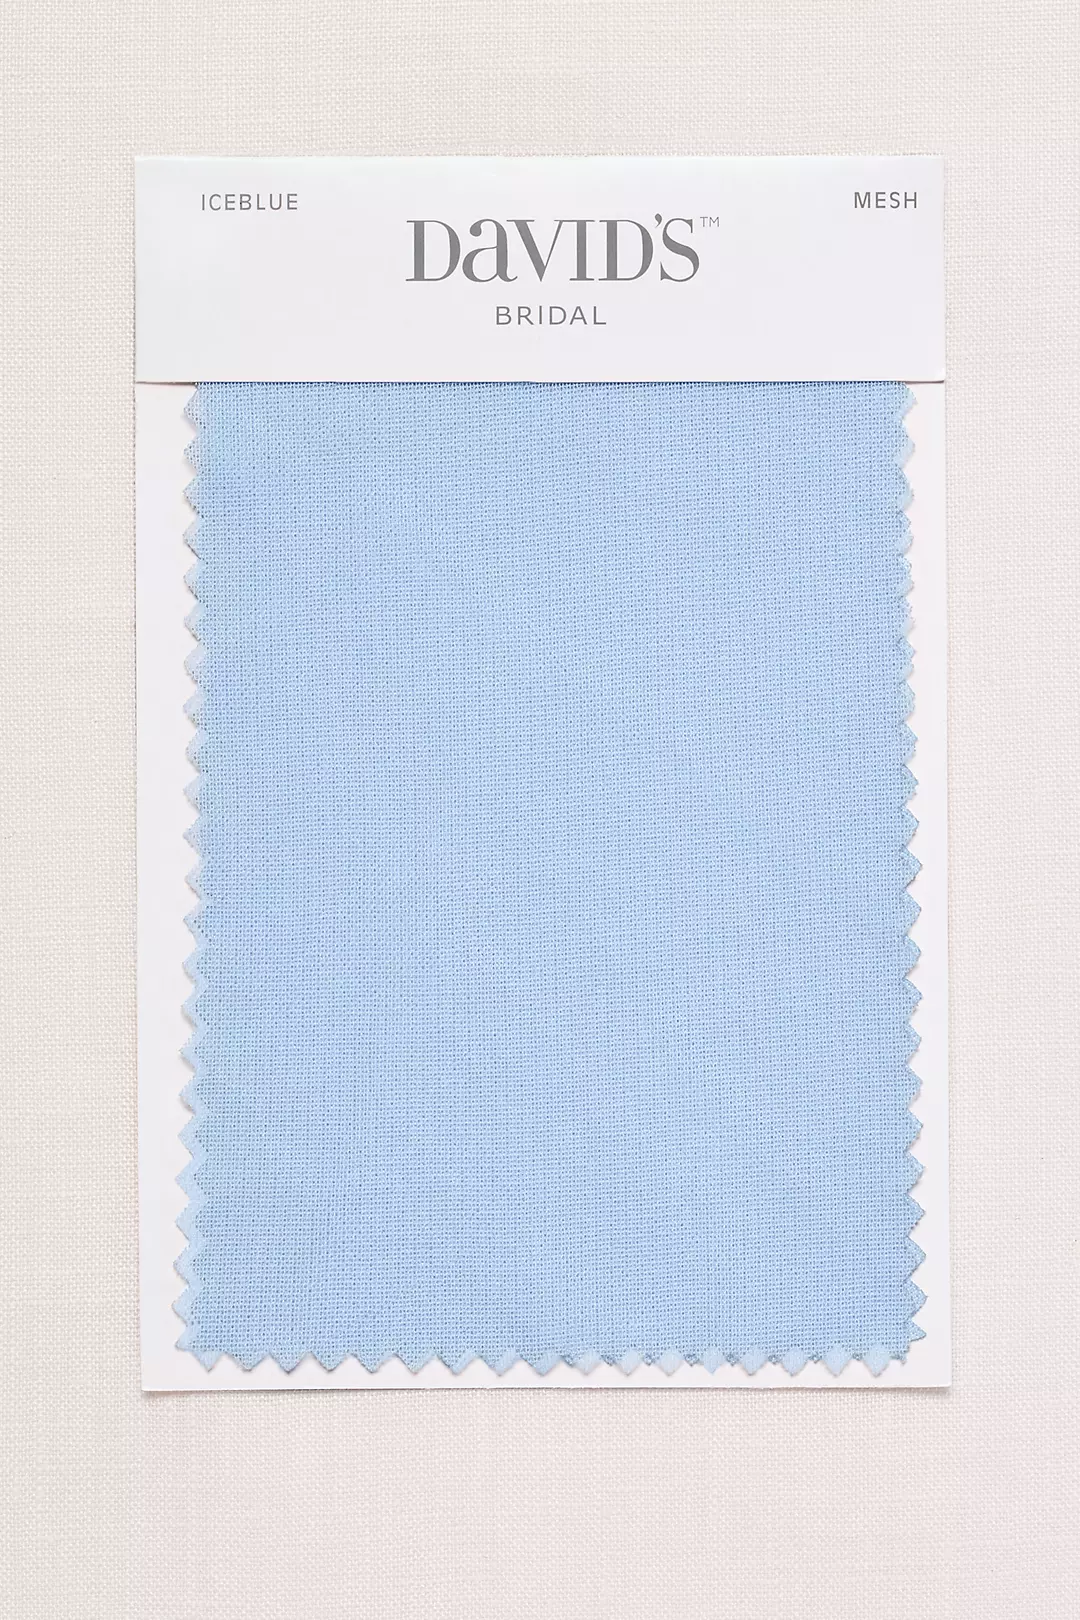 Ice Blue Fabric Swatch Image